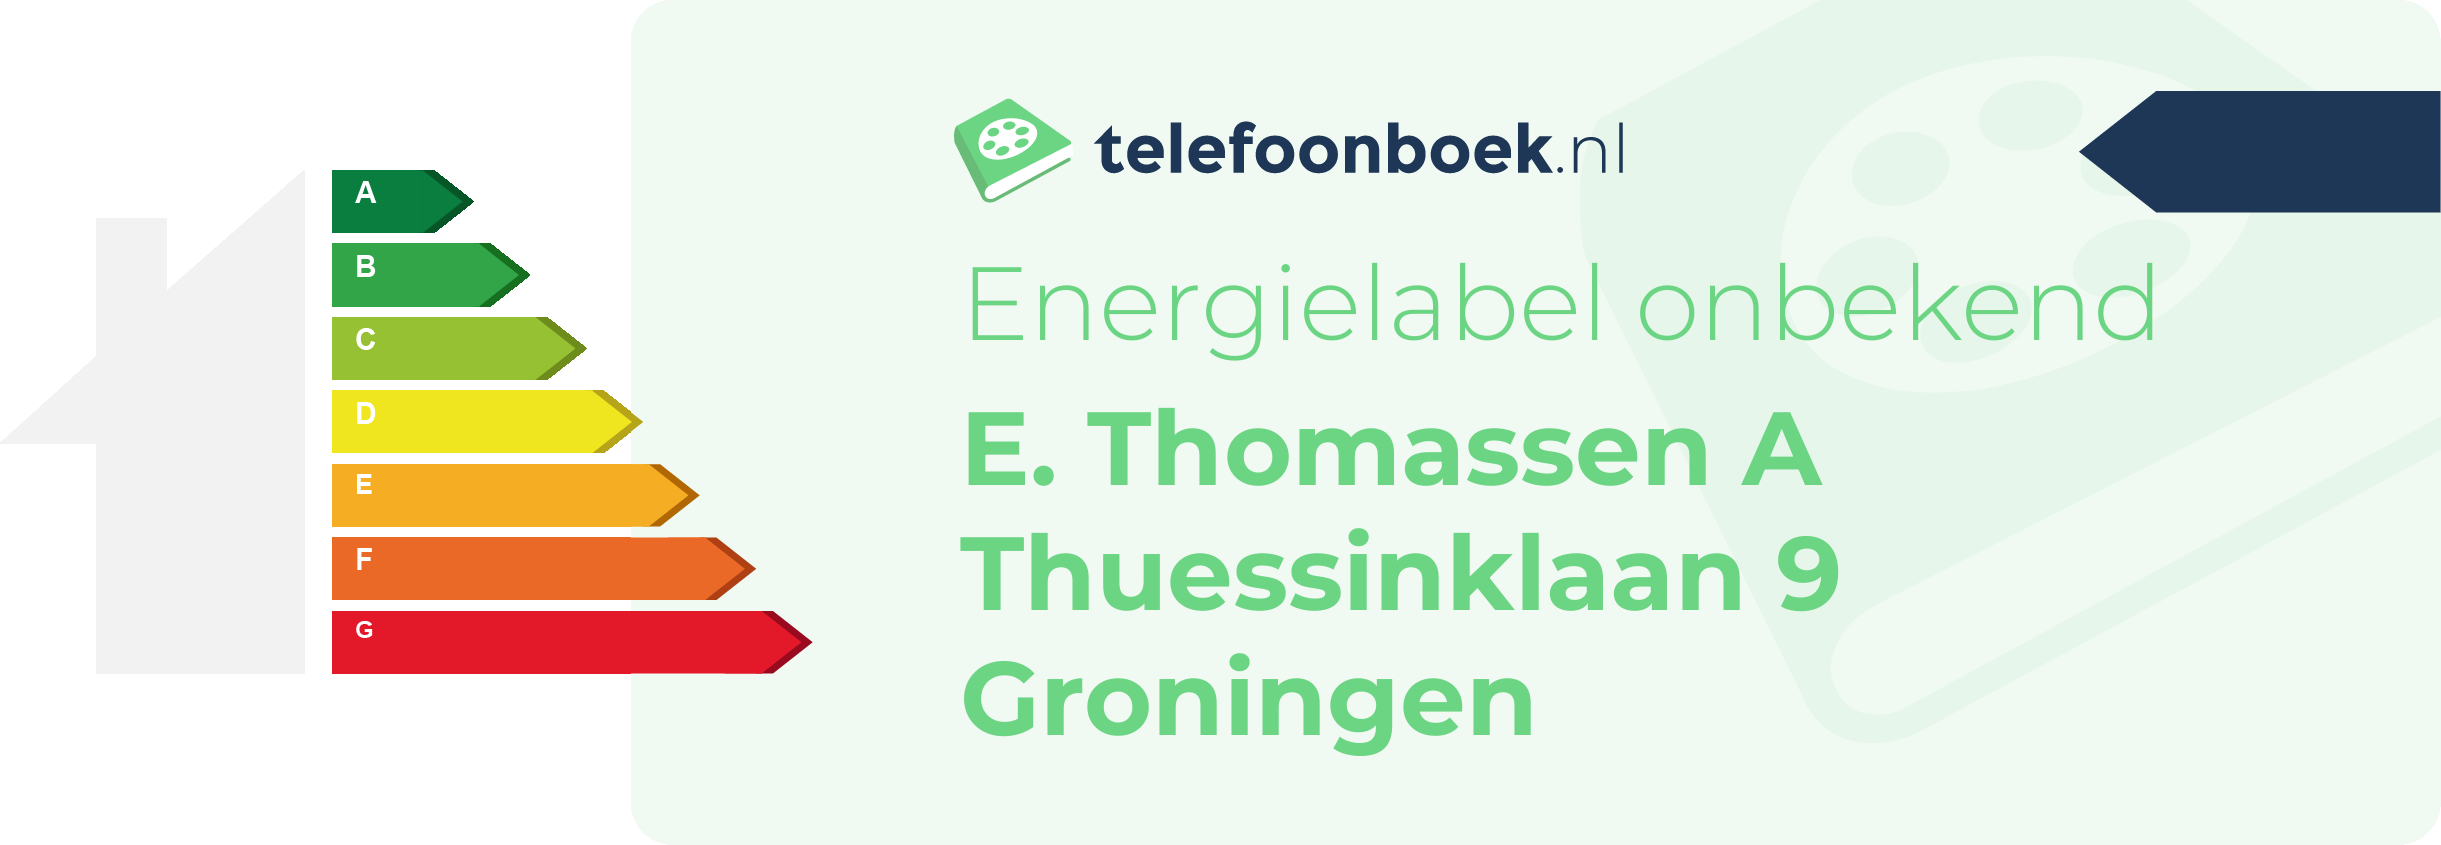 Energielabel E. Thomassen A Thuessinklaan 9 Groningen